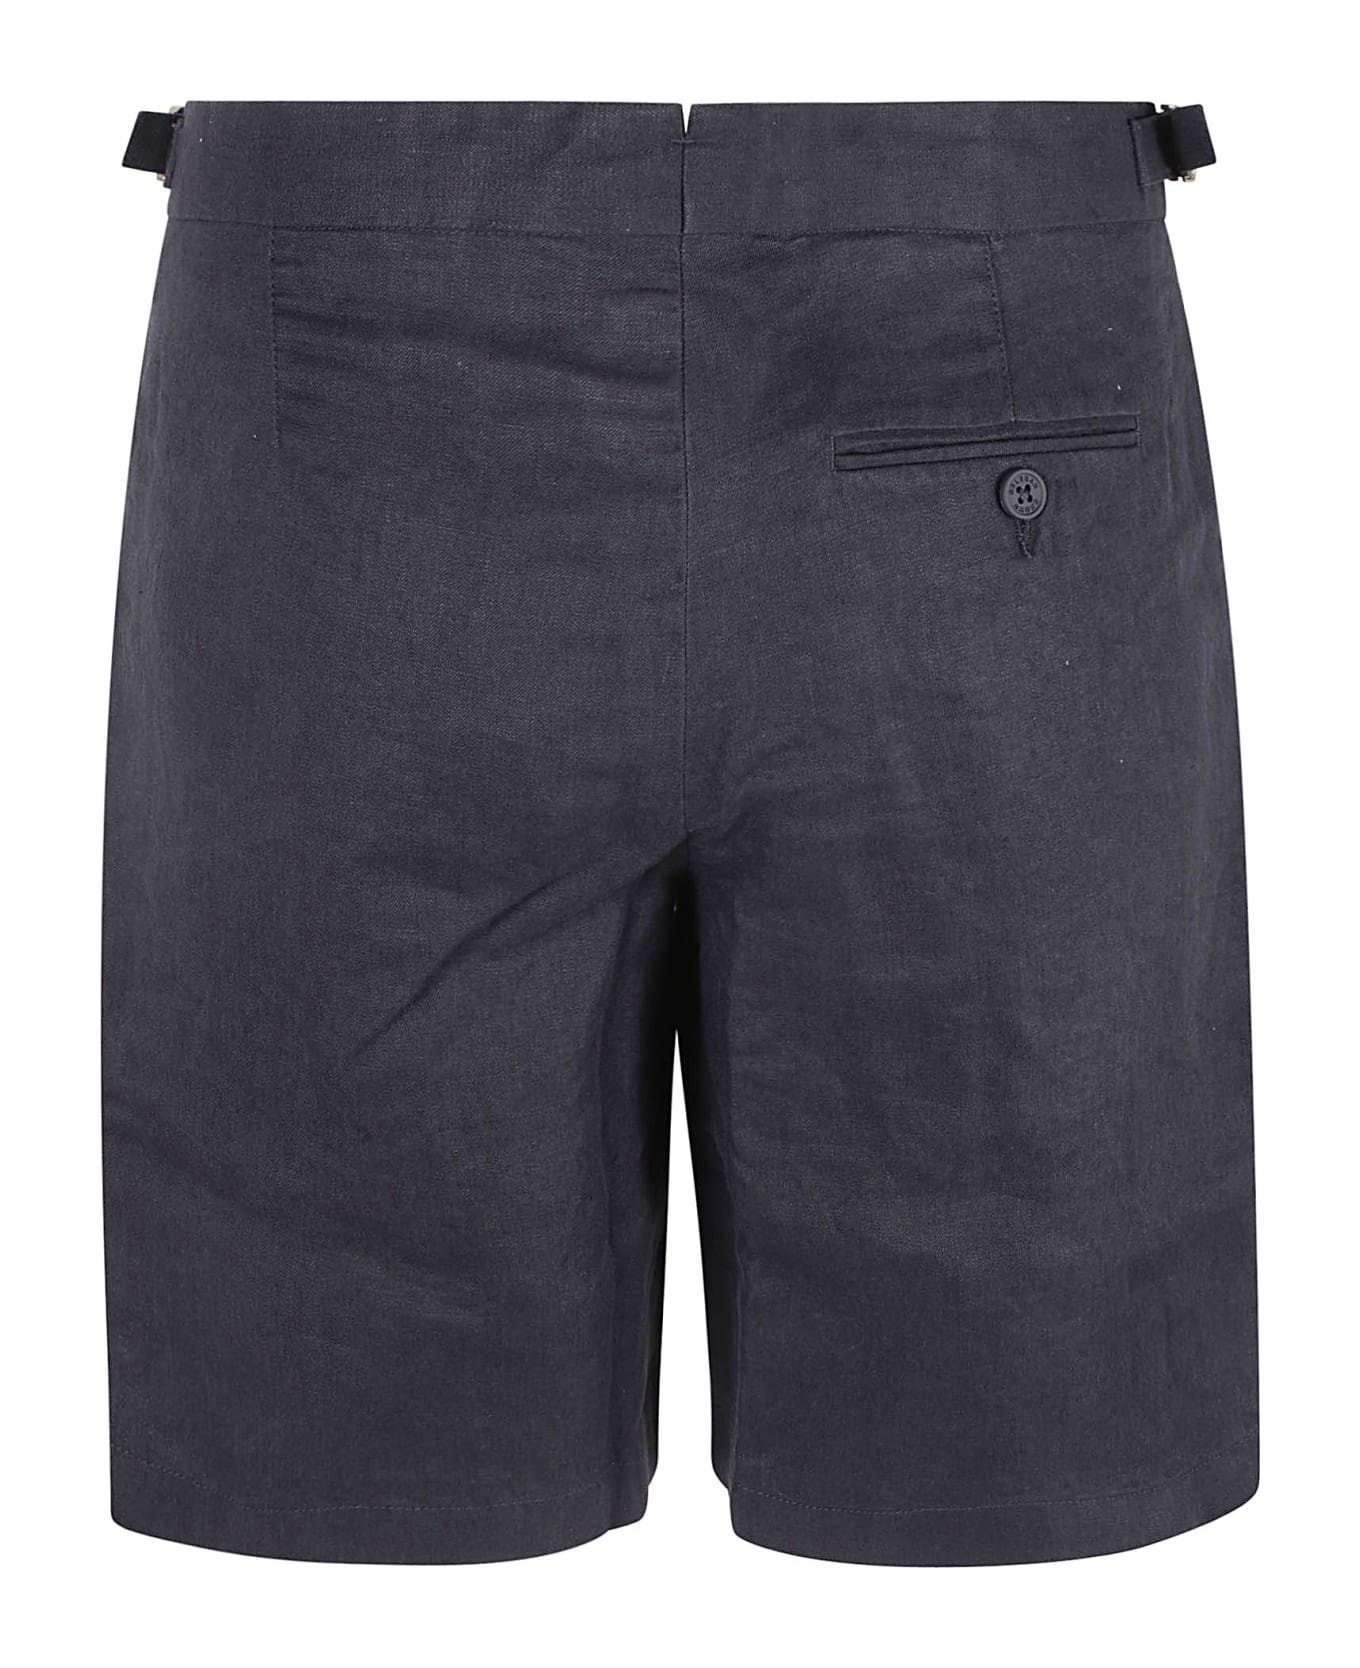 Orlebar Brown Orwich Shorts - Navy